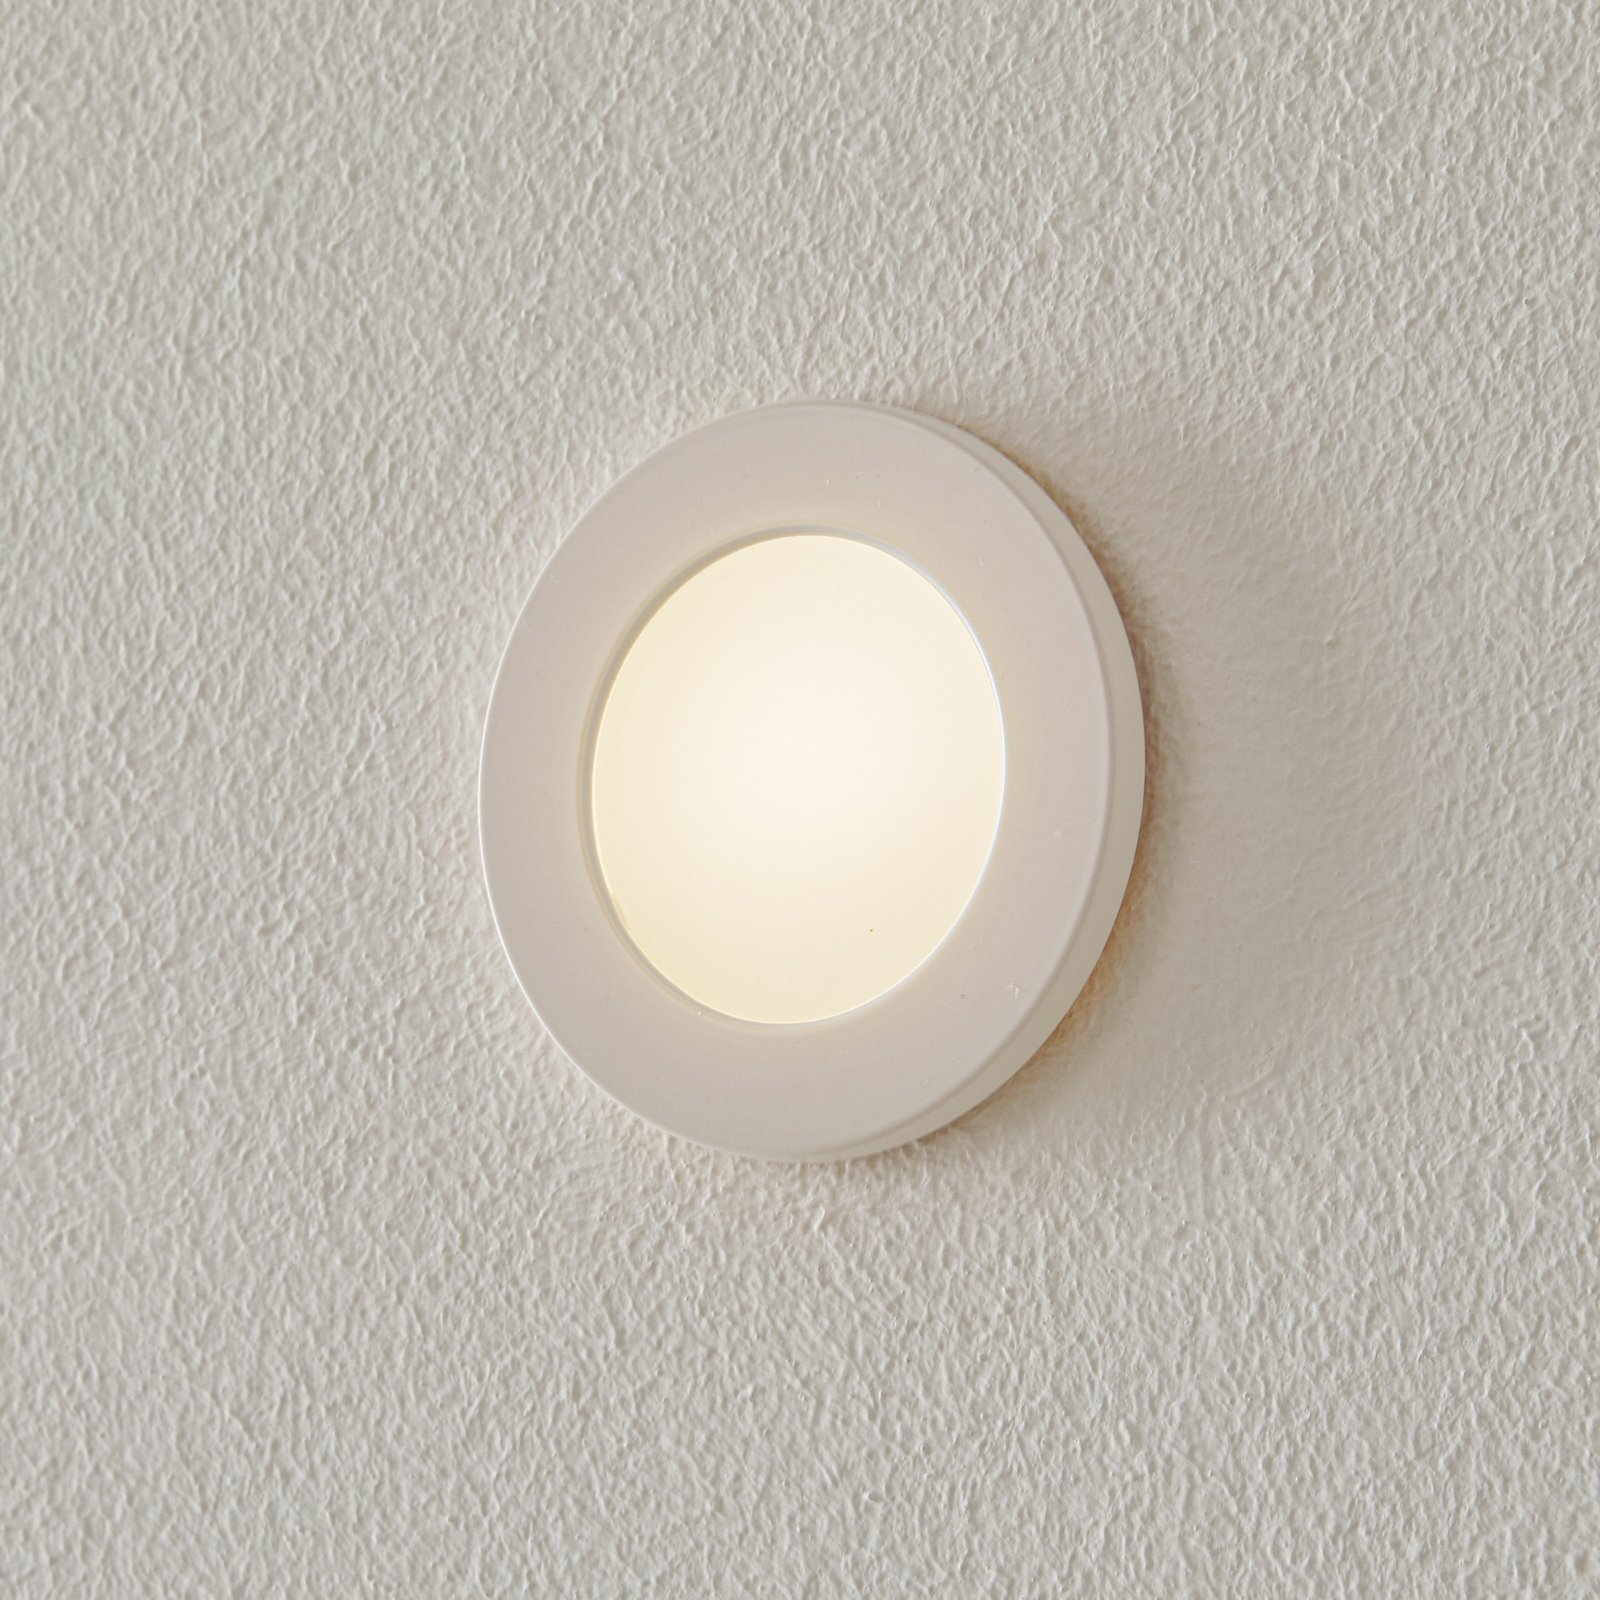 BEGA Accenta wall lamp round frame white 160lm